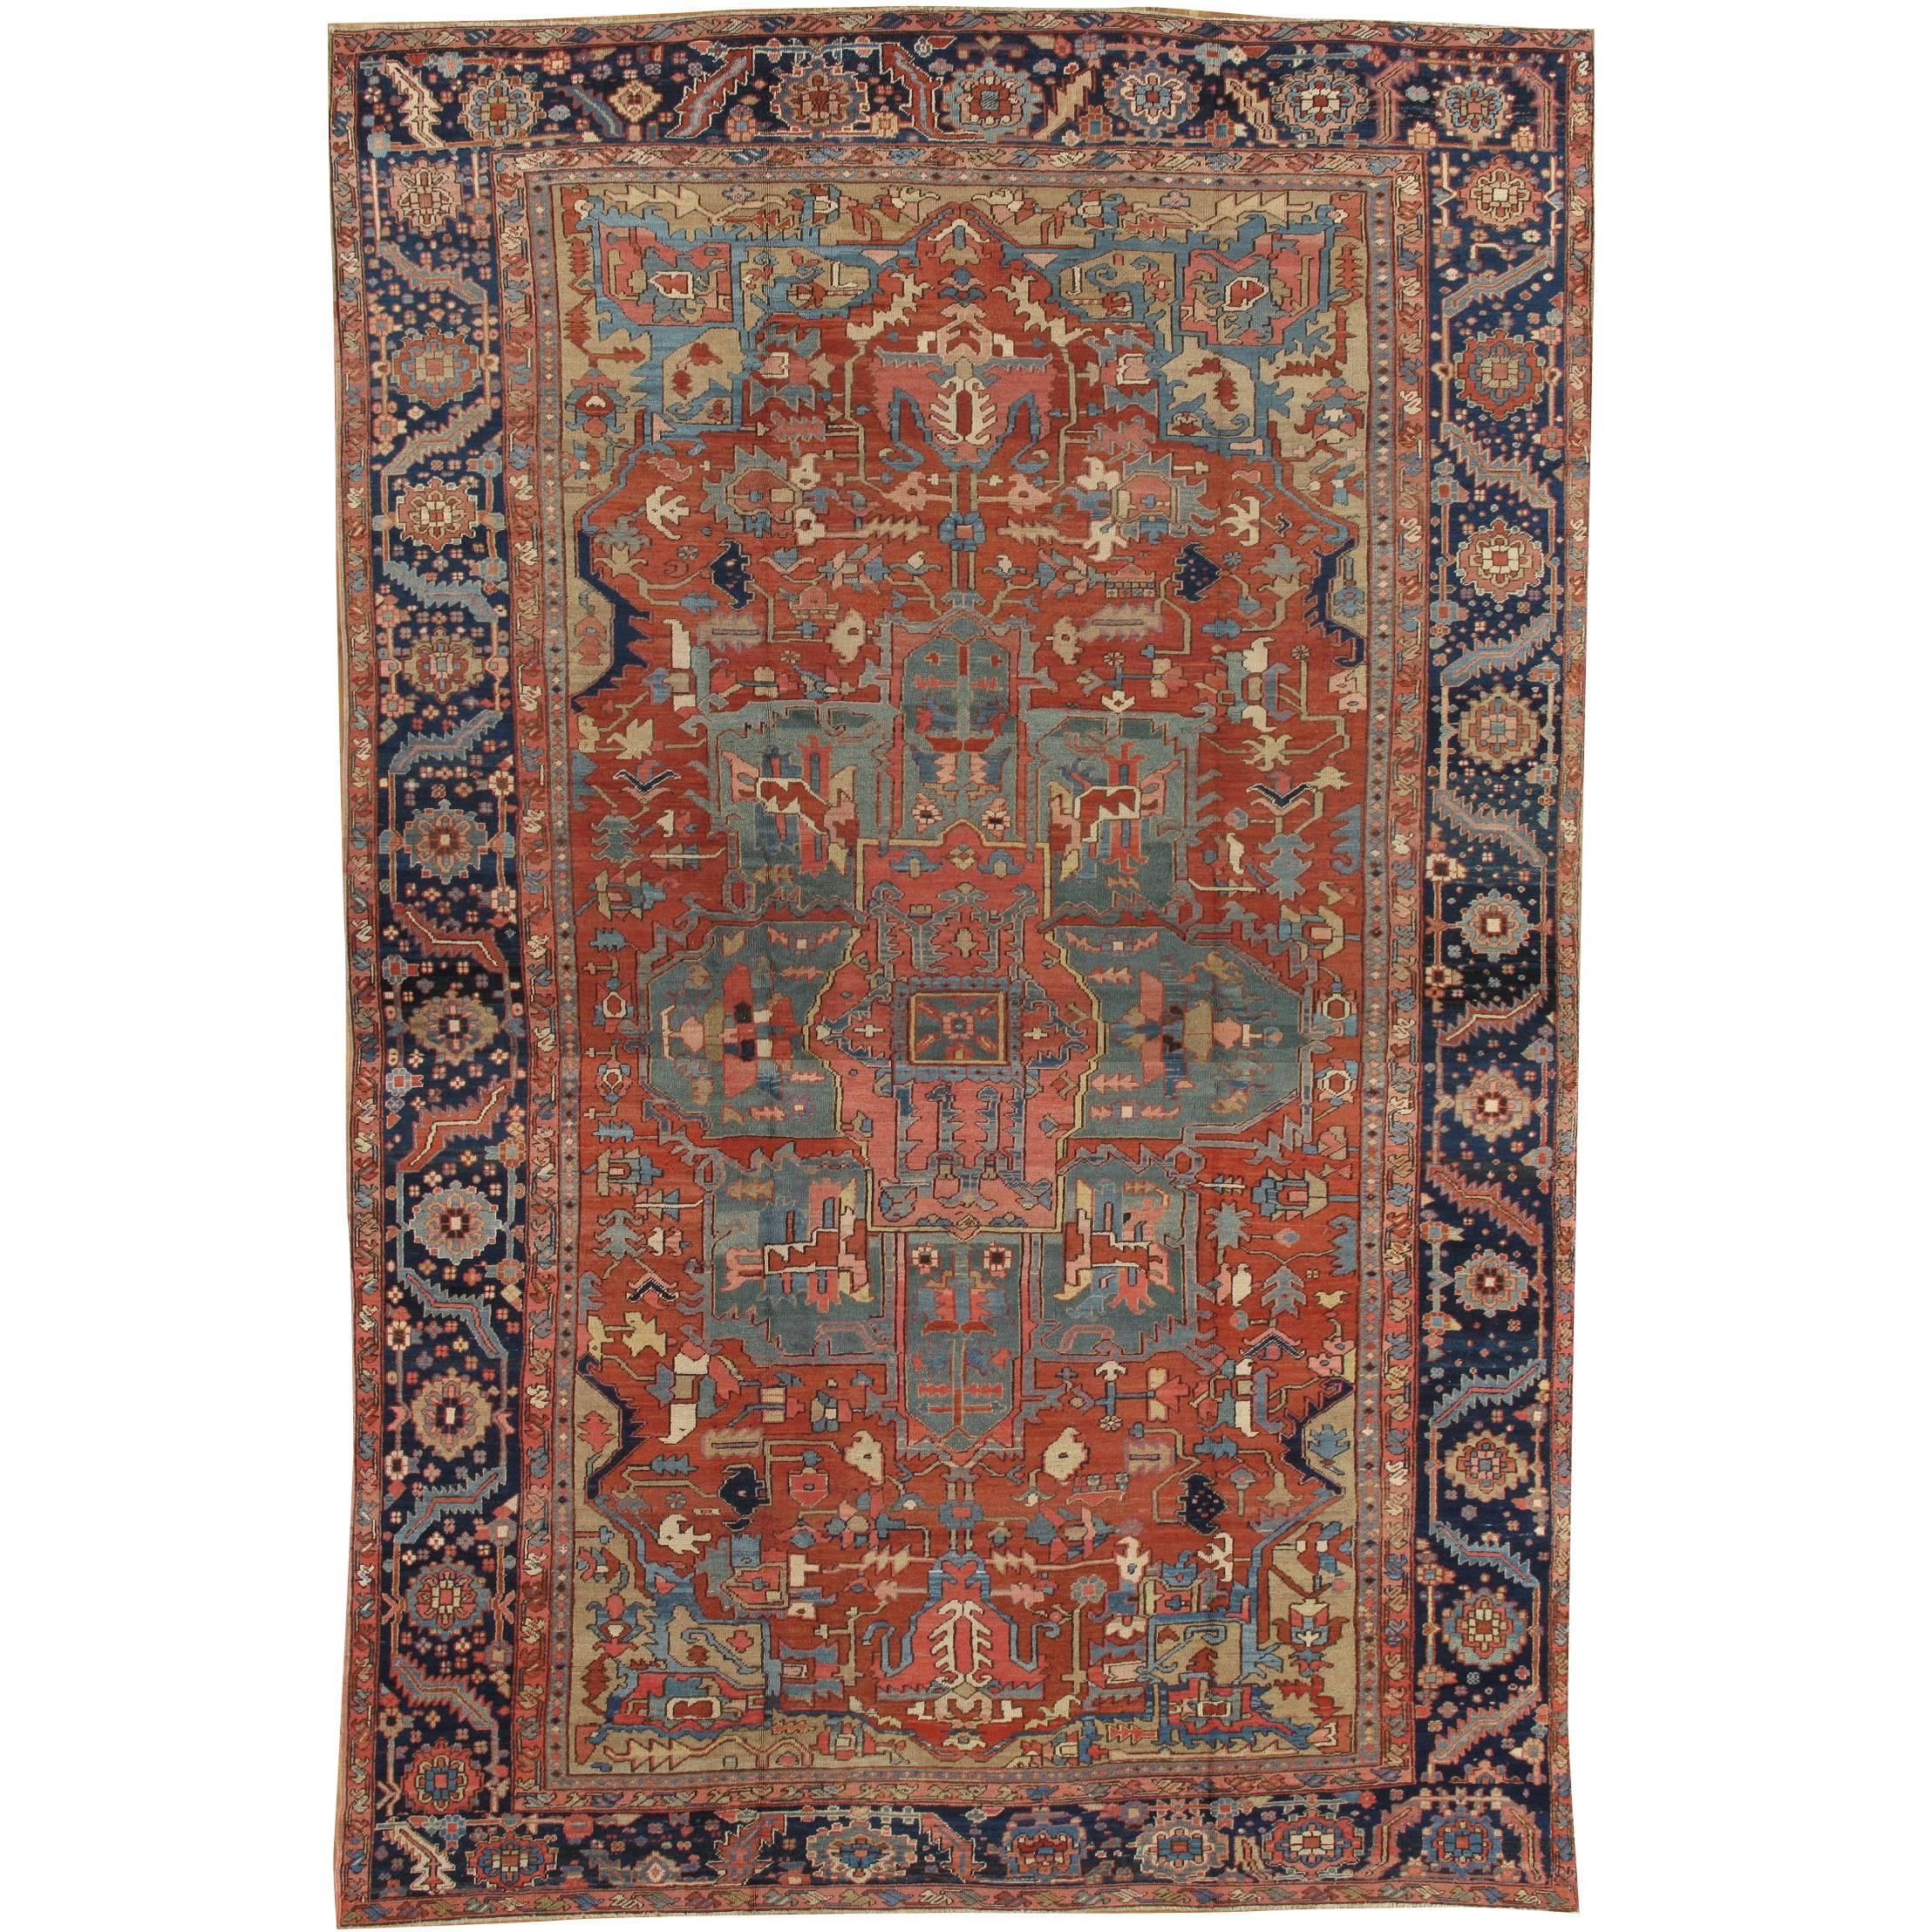 Antique Persian Heriz Carpet, Handmade Wool Oriental Rug, Rust, Navy, Light Blue